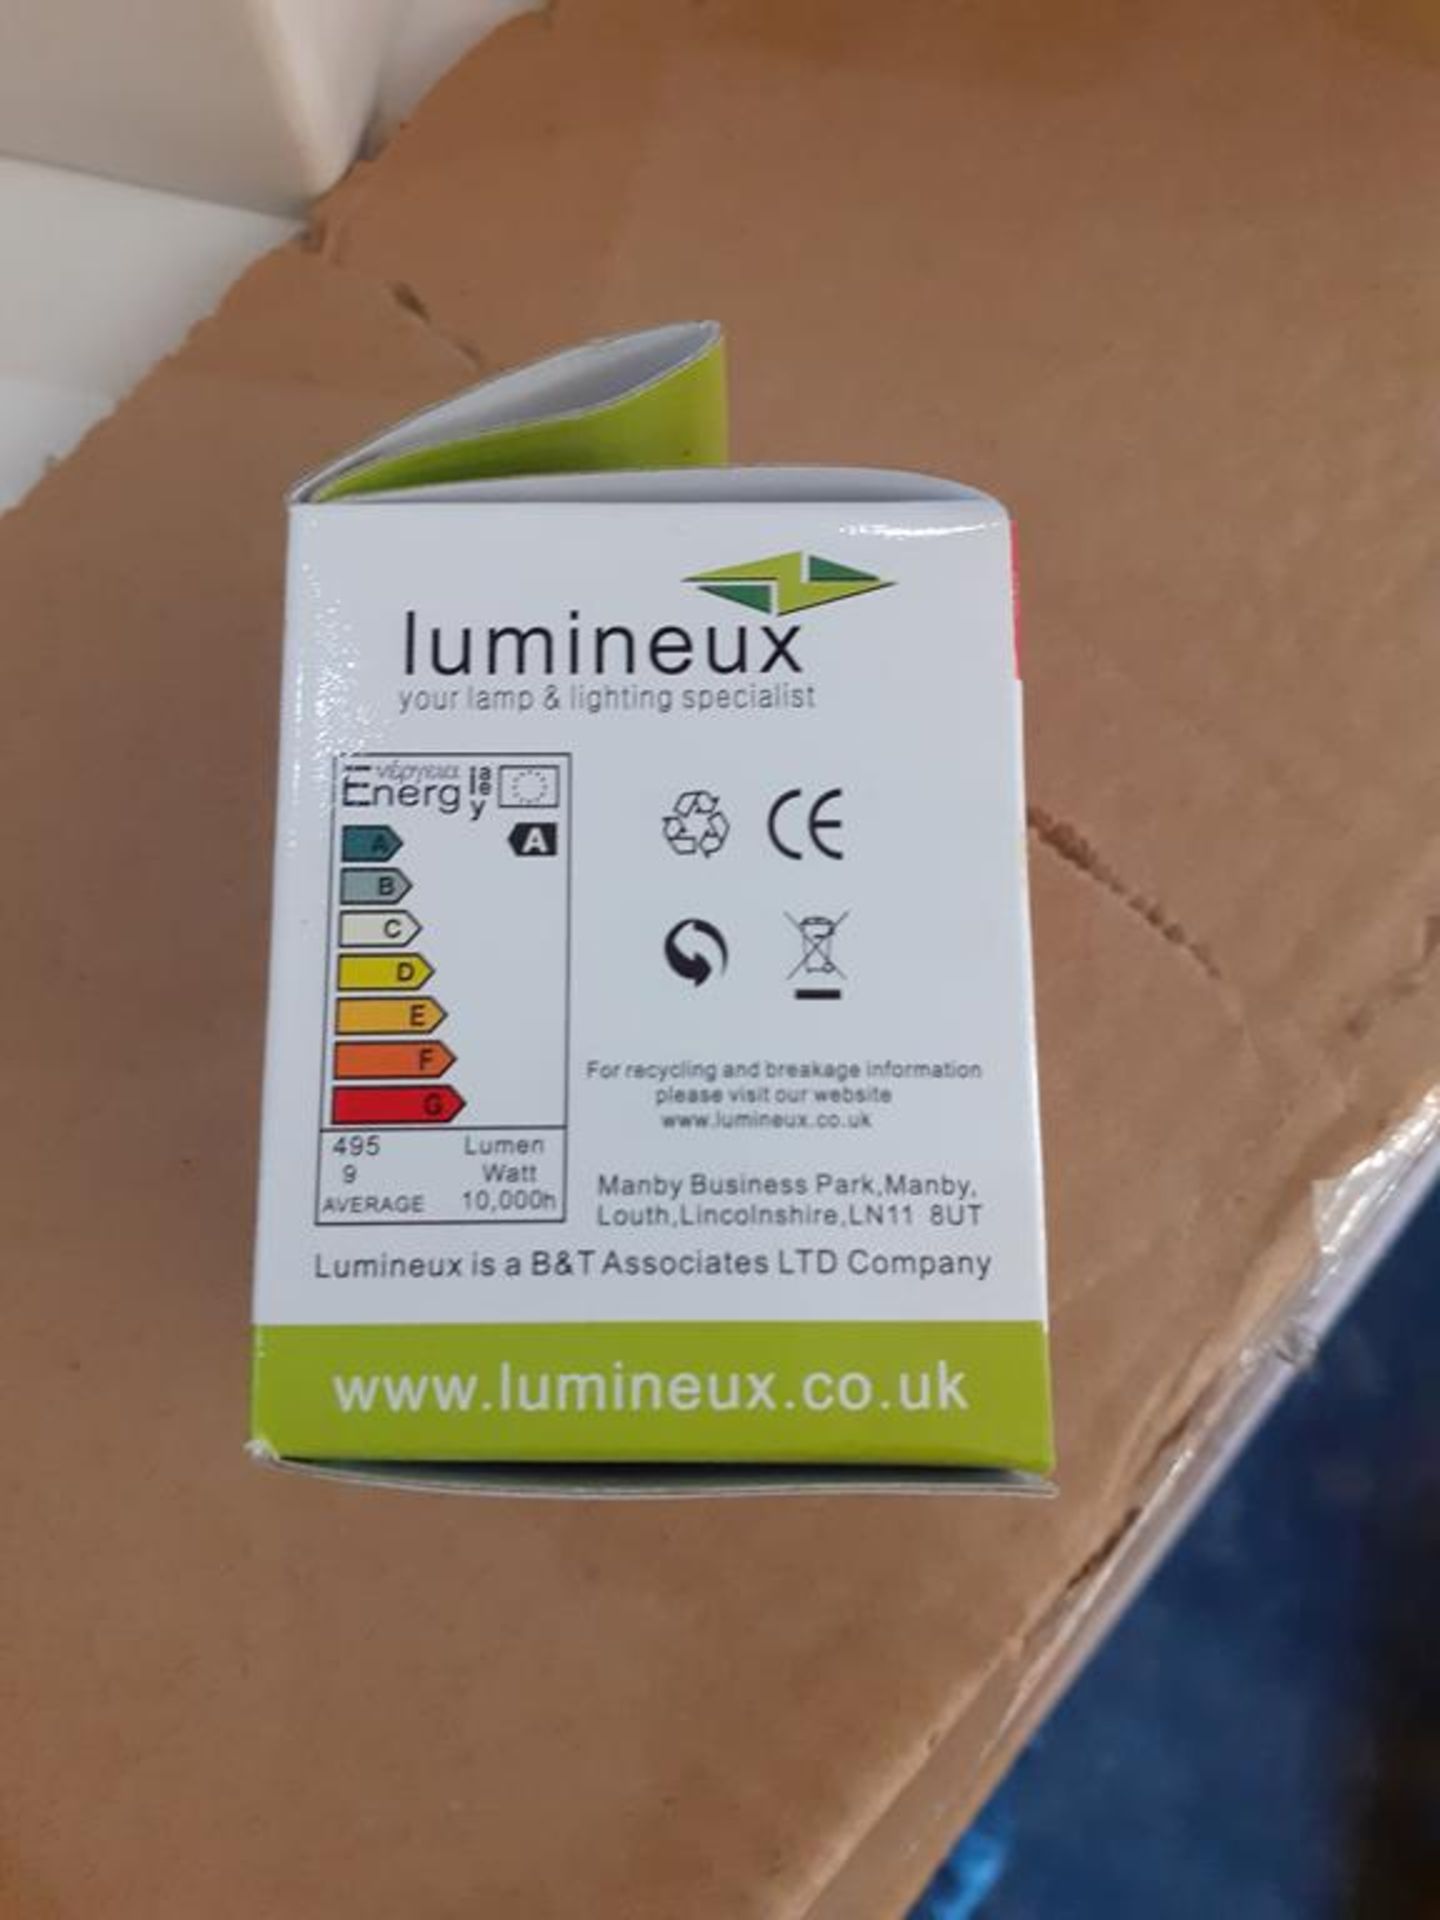 5x boxes of Lumineux Mini GU10 CFL 9W E27 2700K Warm White Bulbs (100pcs per box) - Image 4 of 5